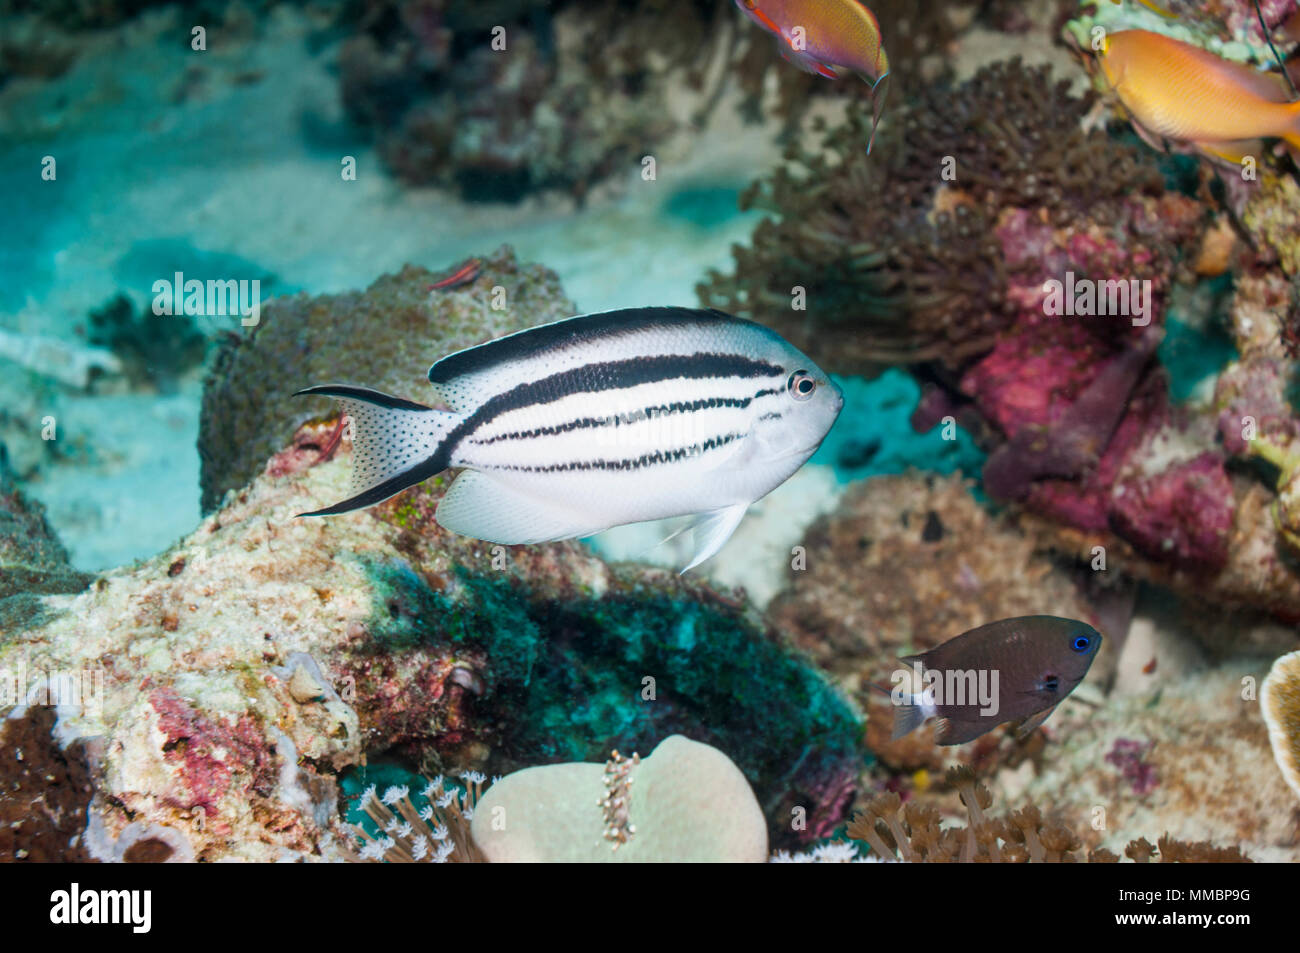 Lamarck's angelfish, Blackstriped angelfish, Freckletail angelfish [Genicanthus lamarck].  West Papua, Indonesia. Stock Photo